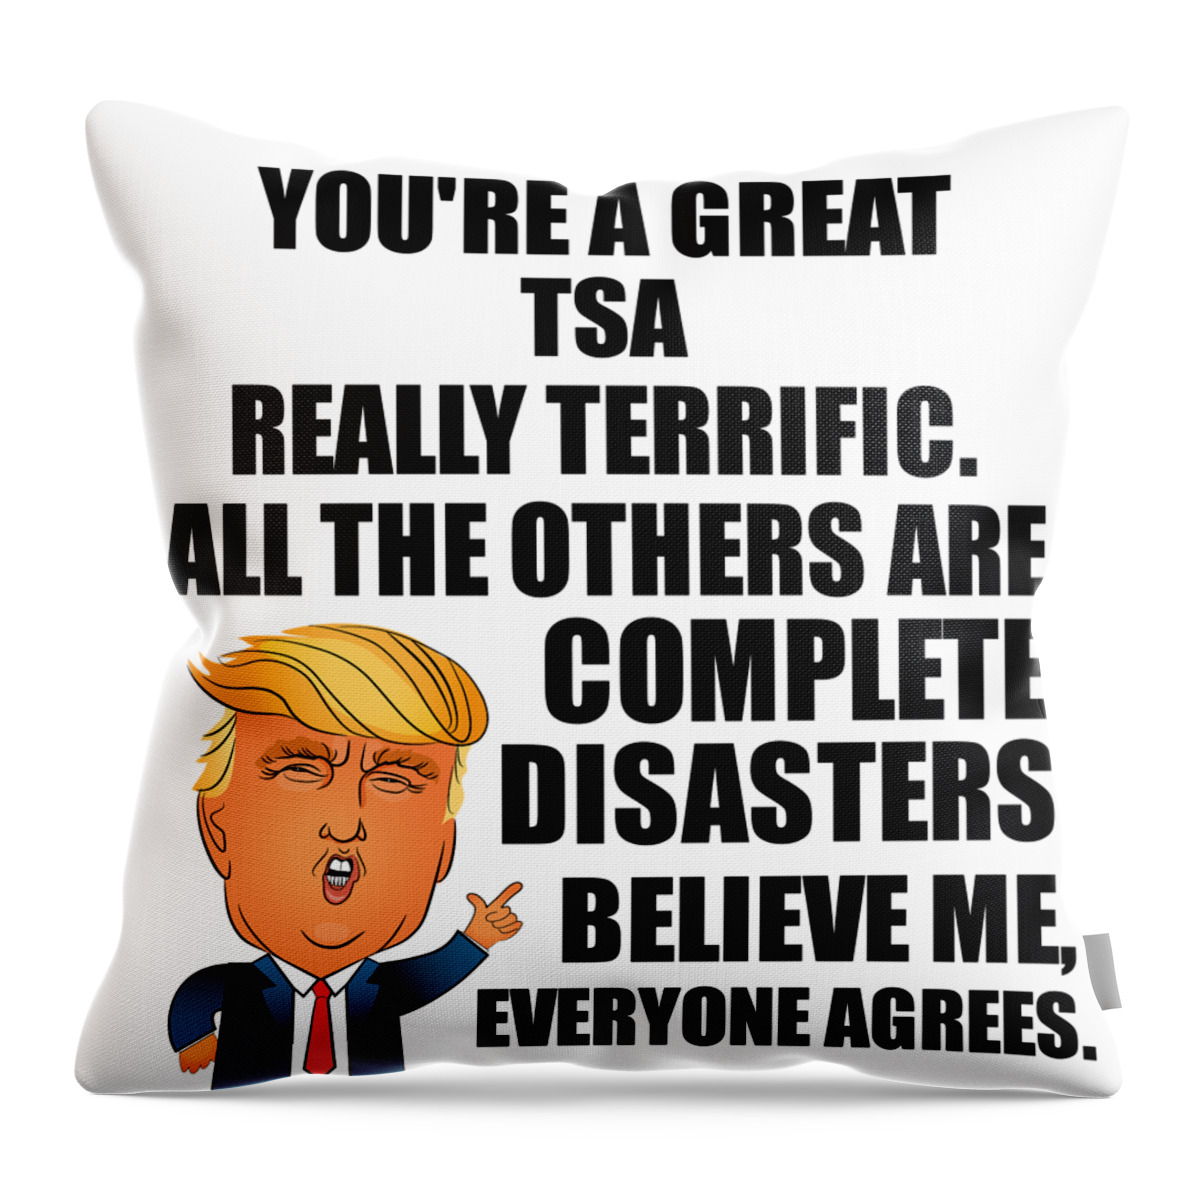 Tsa Throw Pillow featuring the digital art Trump TSA Funny Gift for TSA Coworker Gag Great Terrific President Fan Potus Quote Office Joke by Jeff Creation